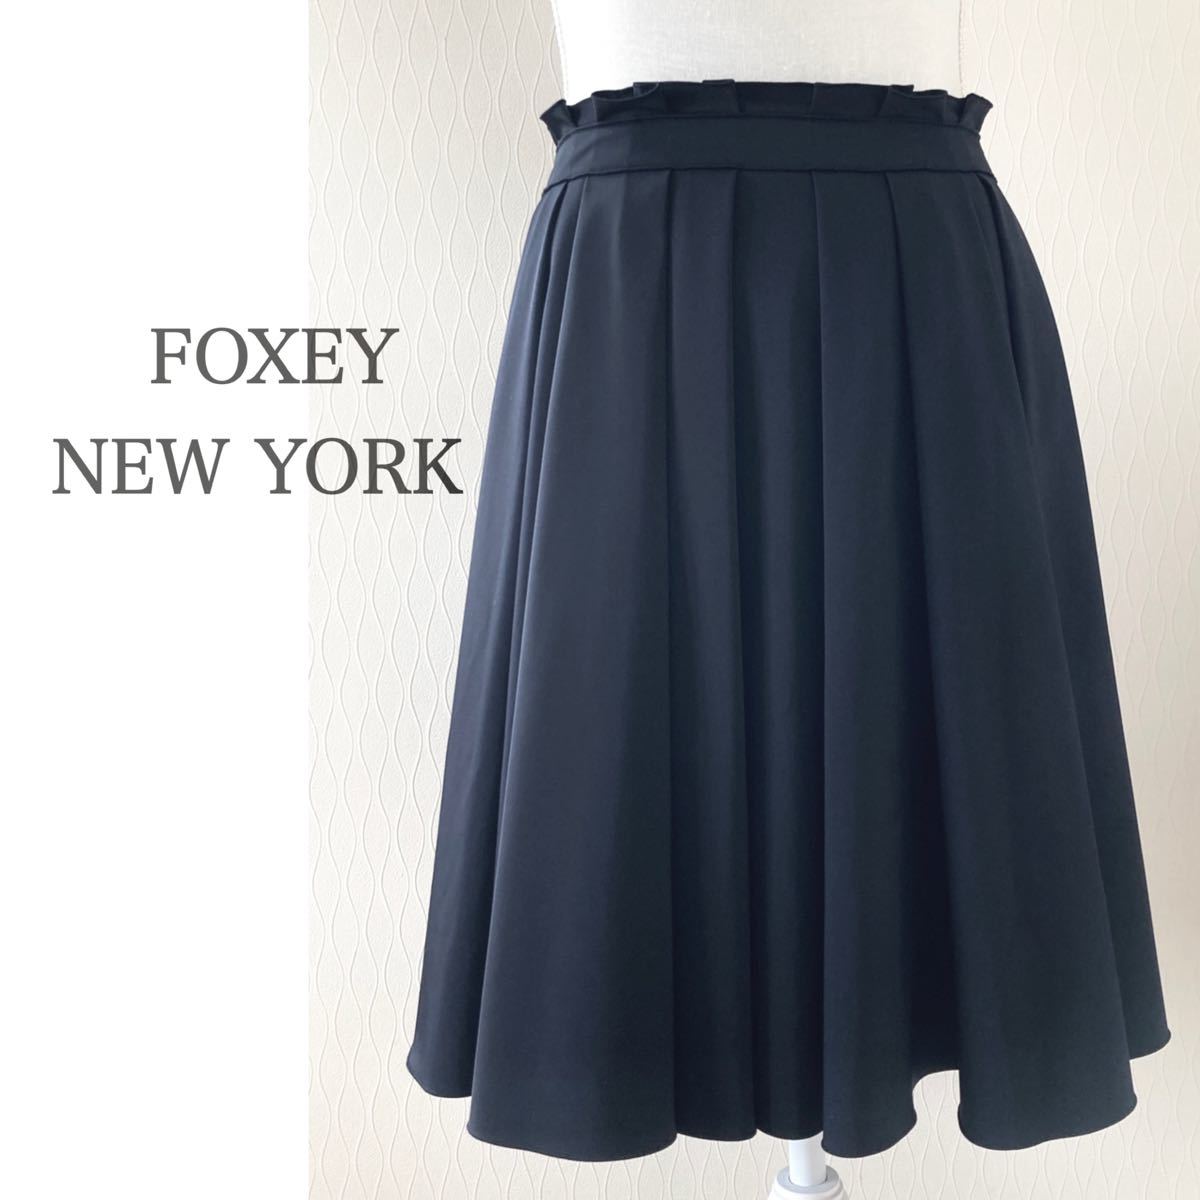 FOXEY NEW YORKフレアスカート プリーツスカート-